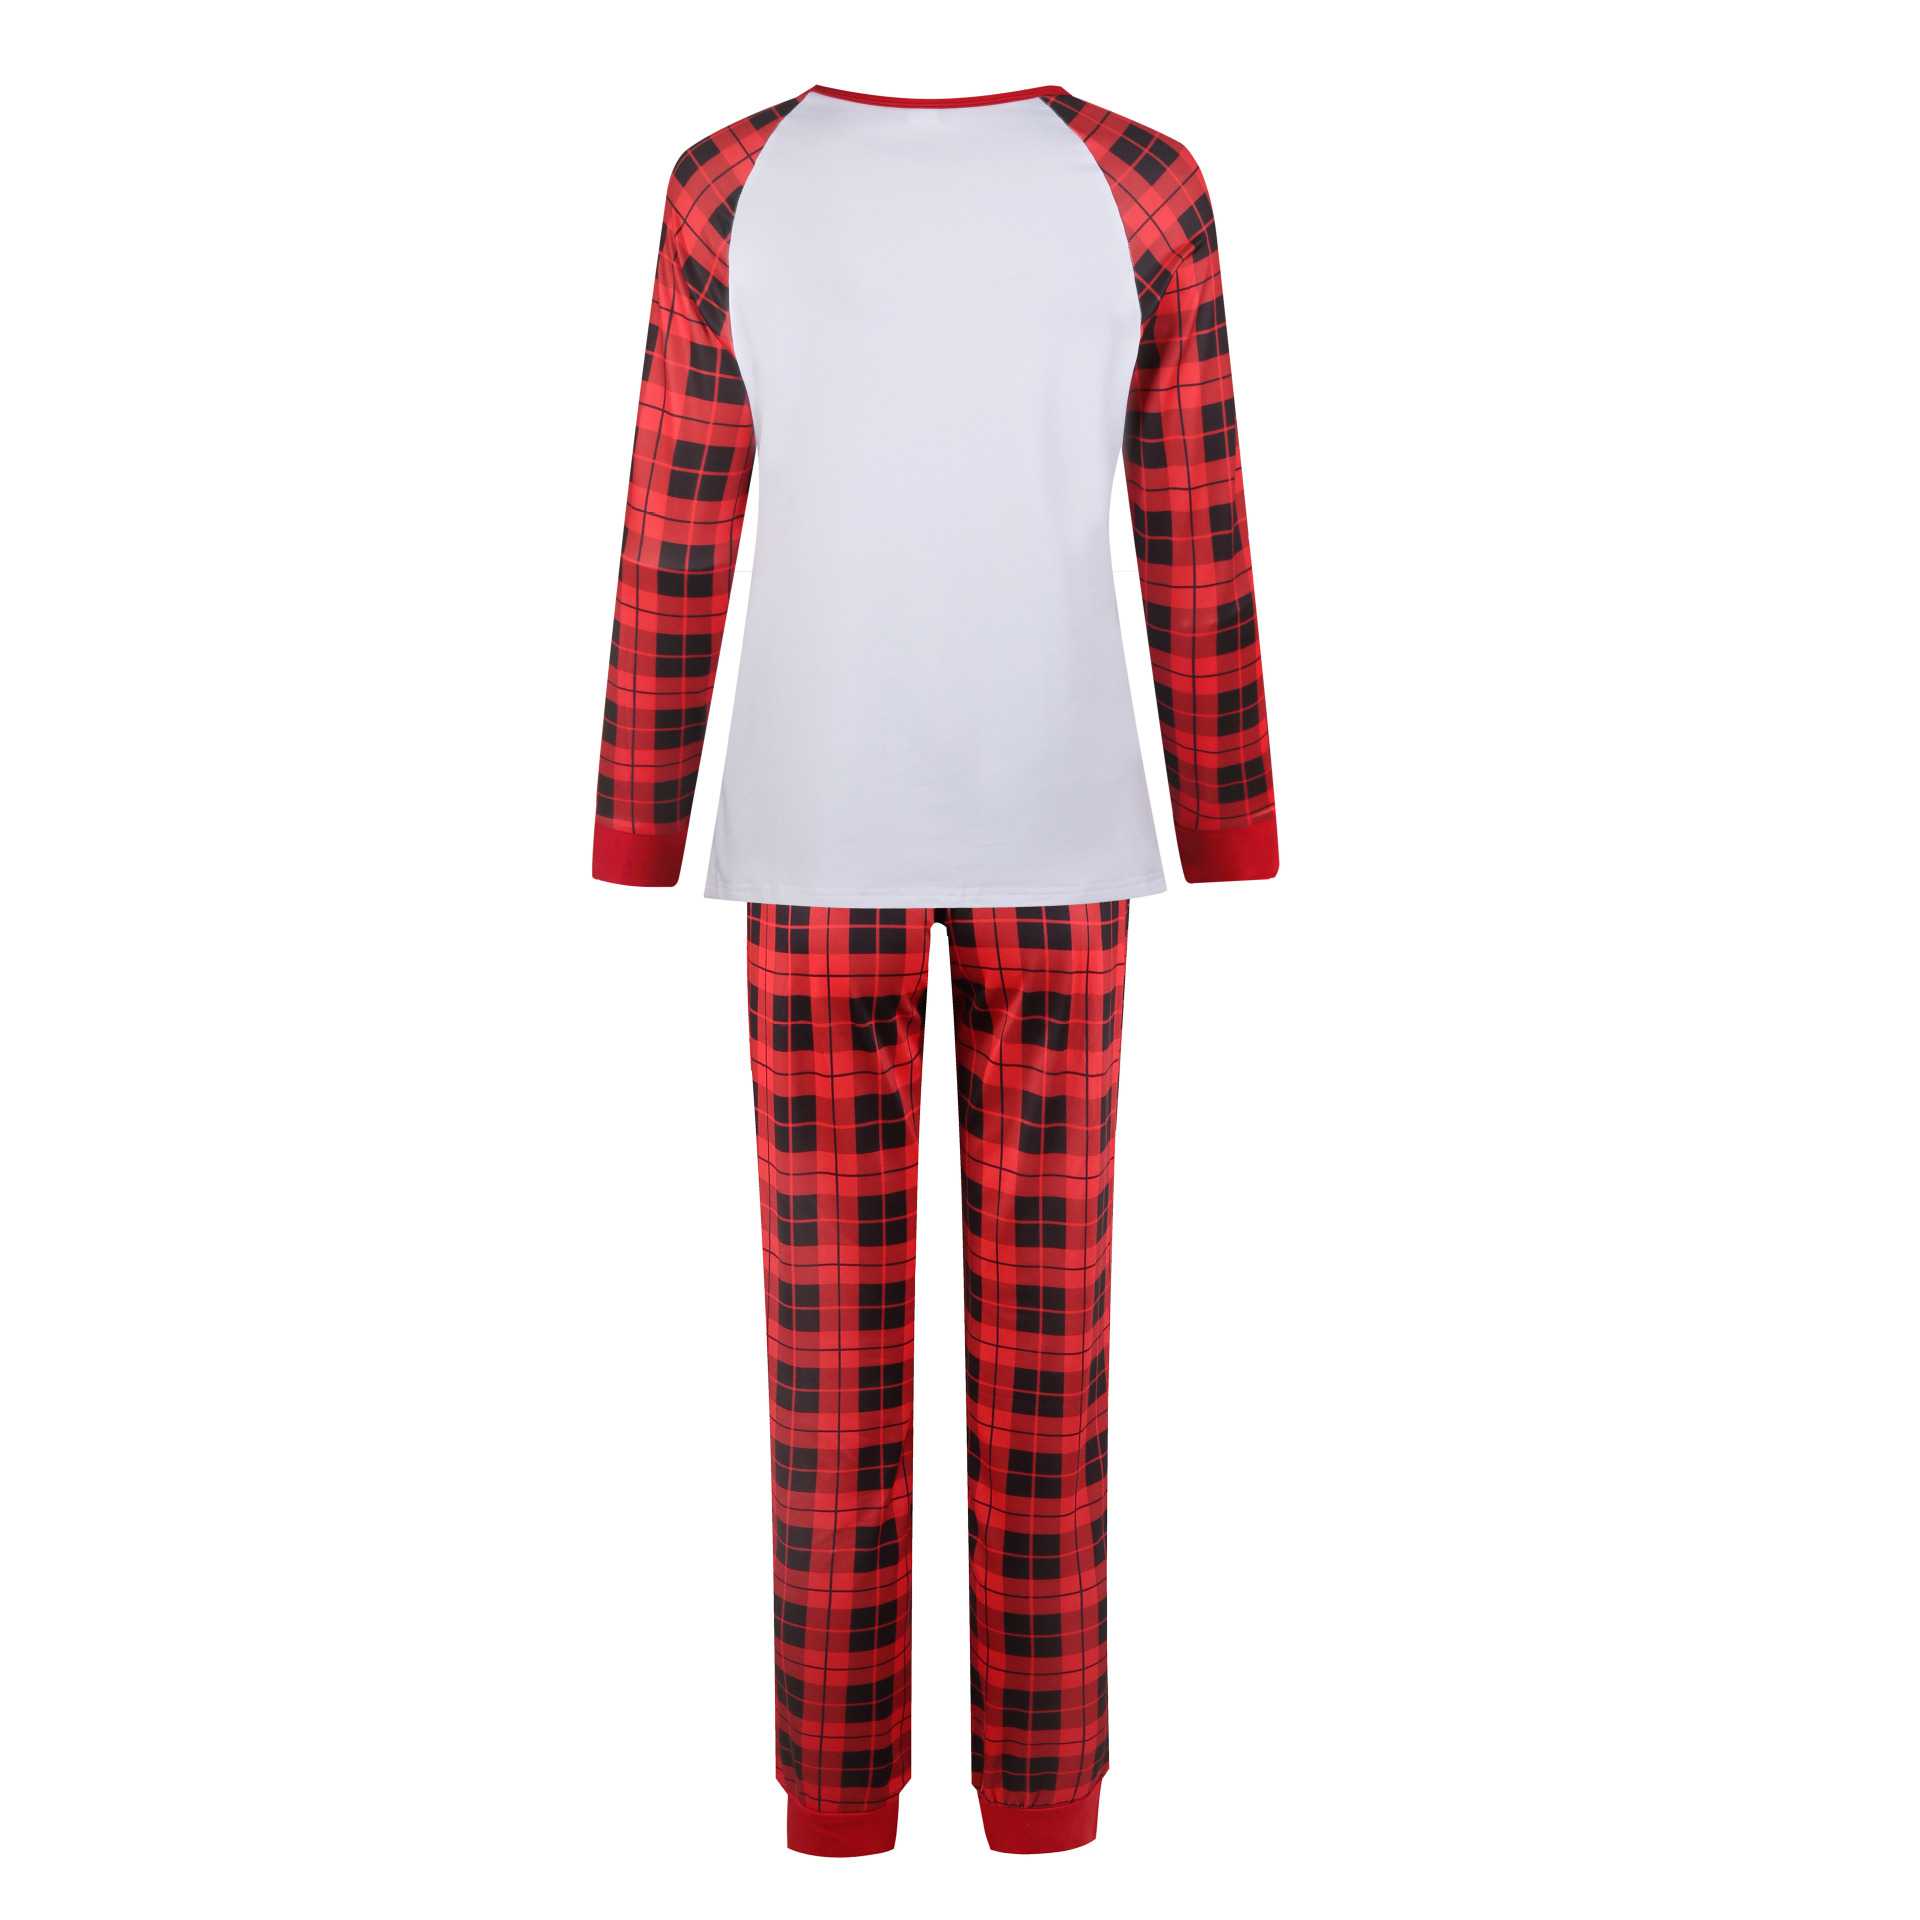 Christmas parent-child Winter plus velvet warmth round neck print family suit pajamas on sale 9